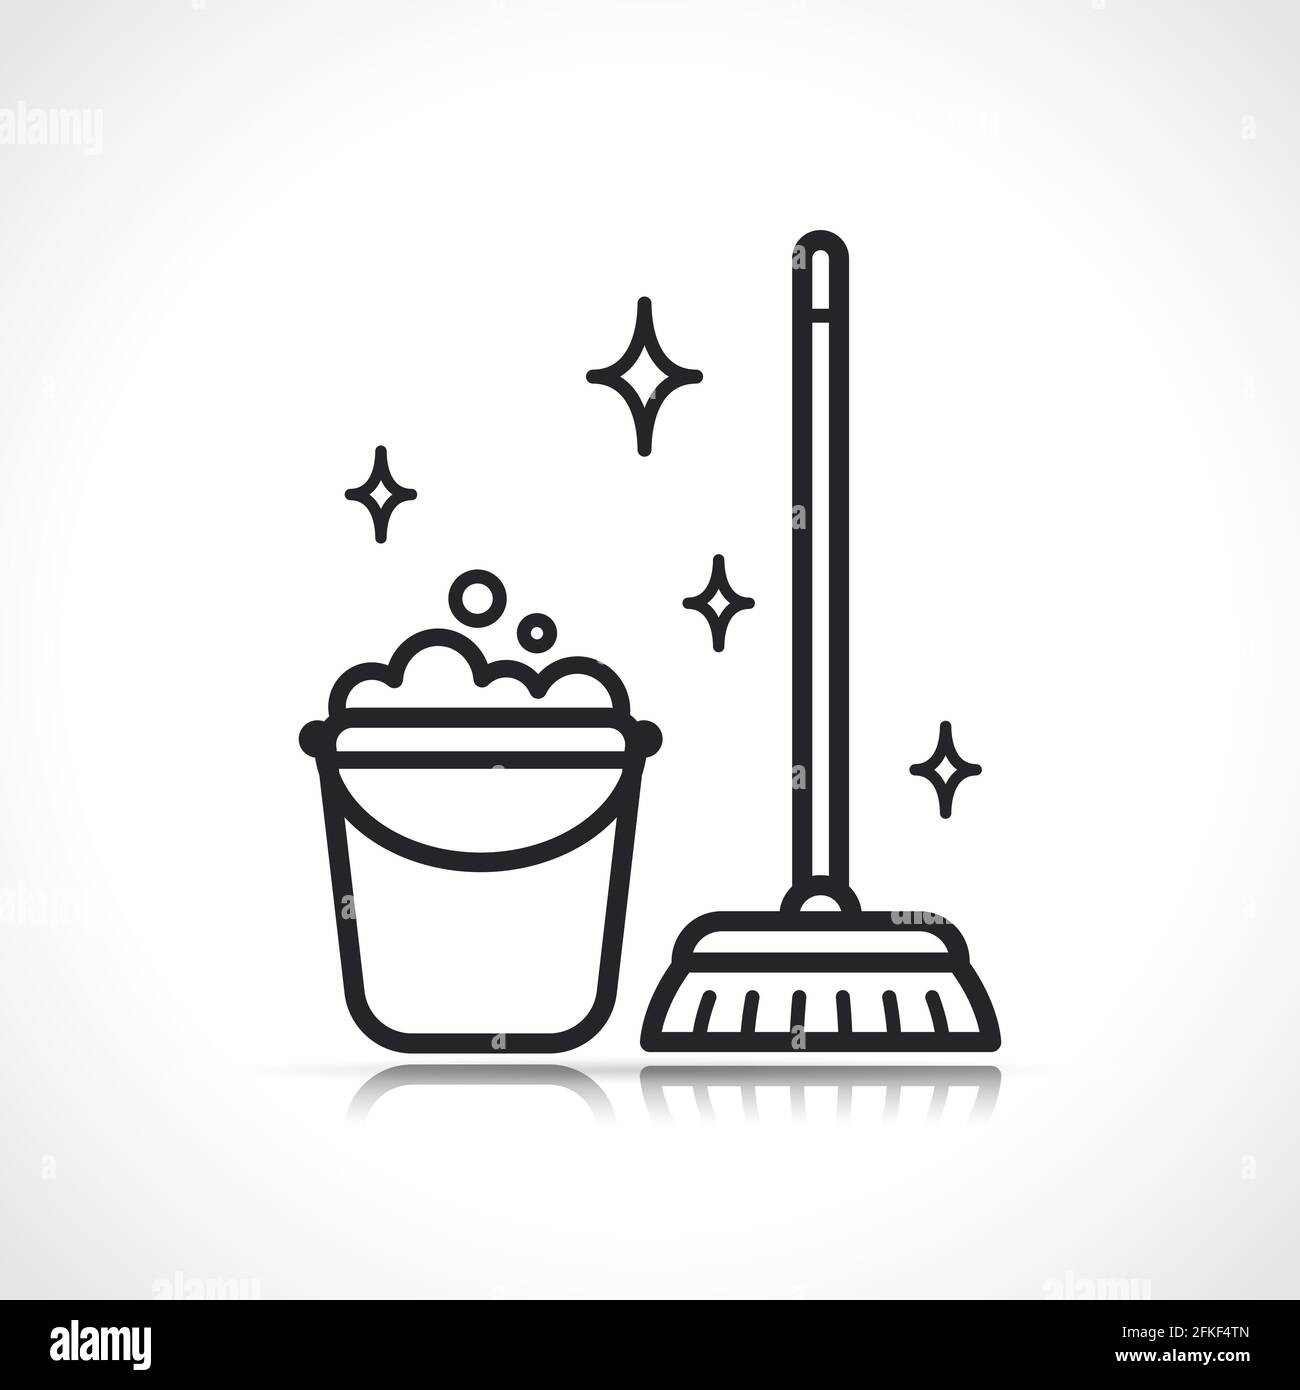 https://c8.alamy.com/comp/2FKF4TN/cleaning-broom-and-bucket-icon-flat-line-2FKF4TN.jpg